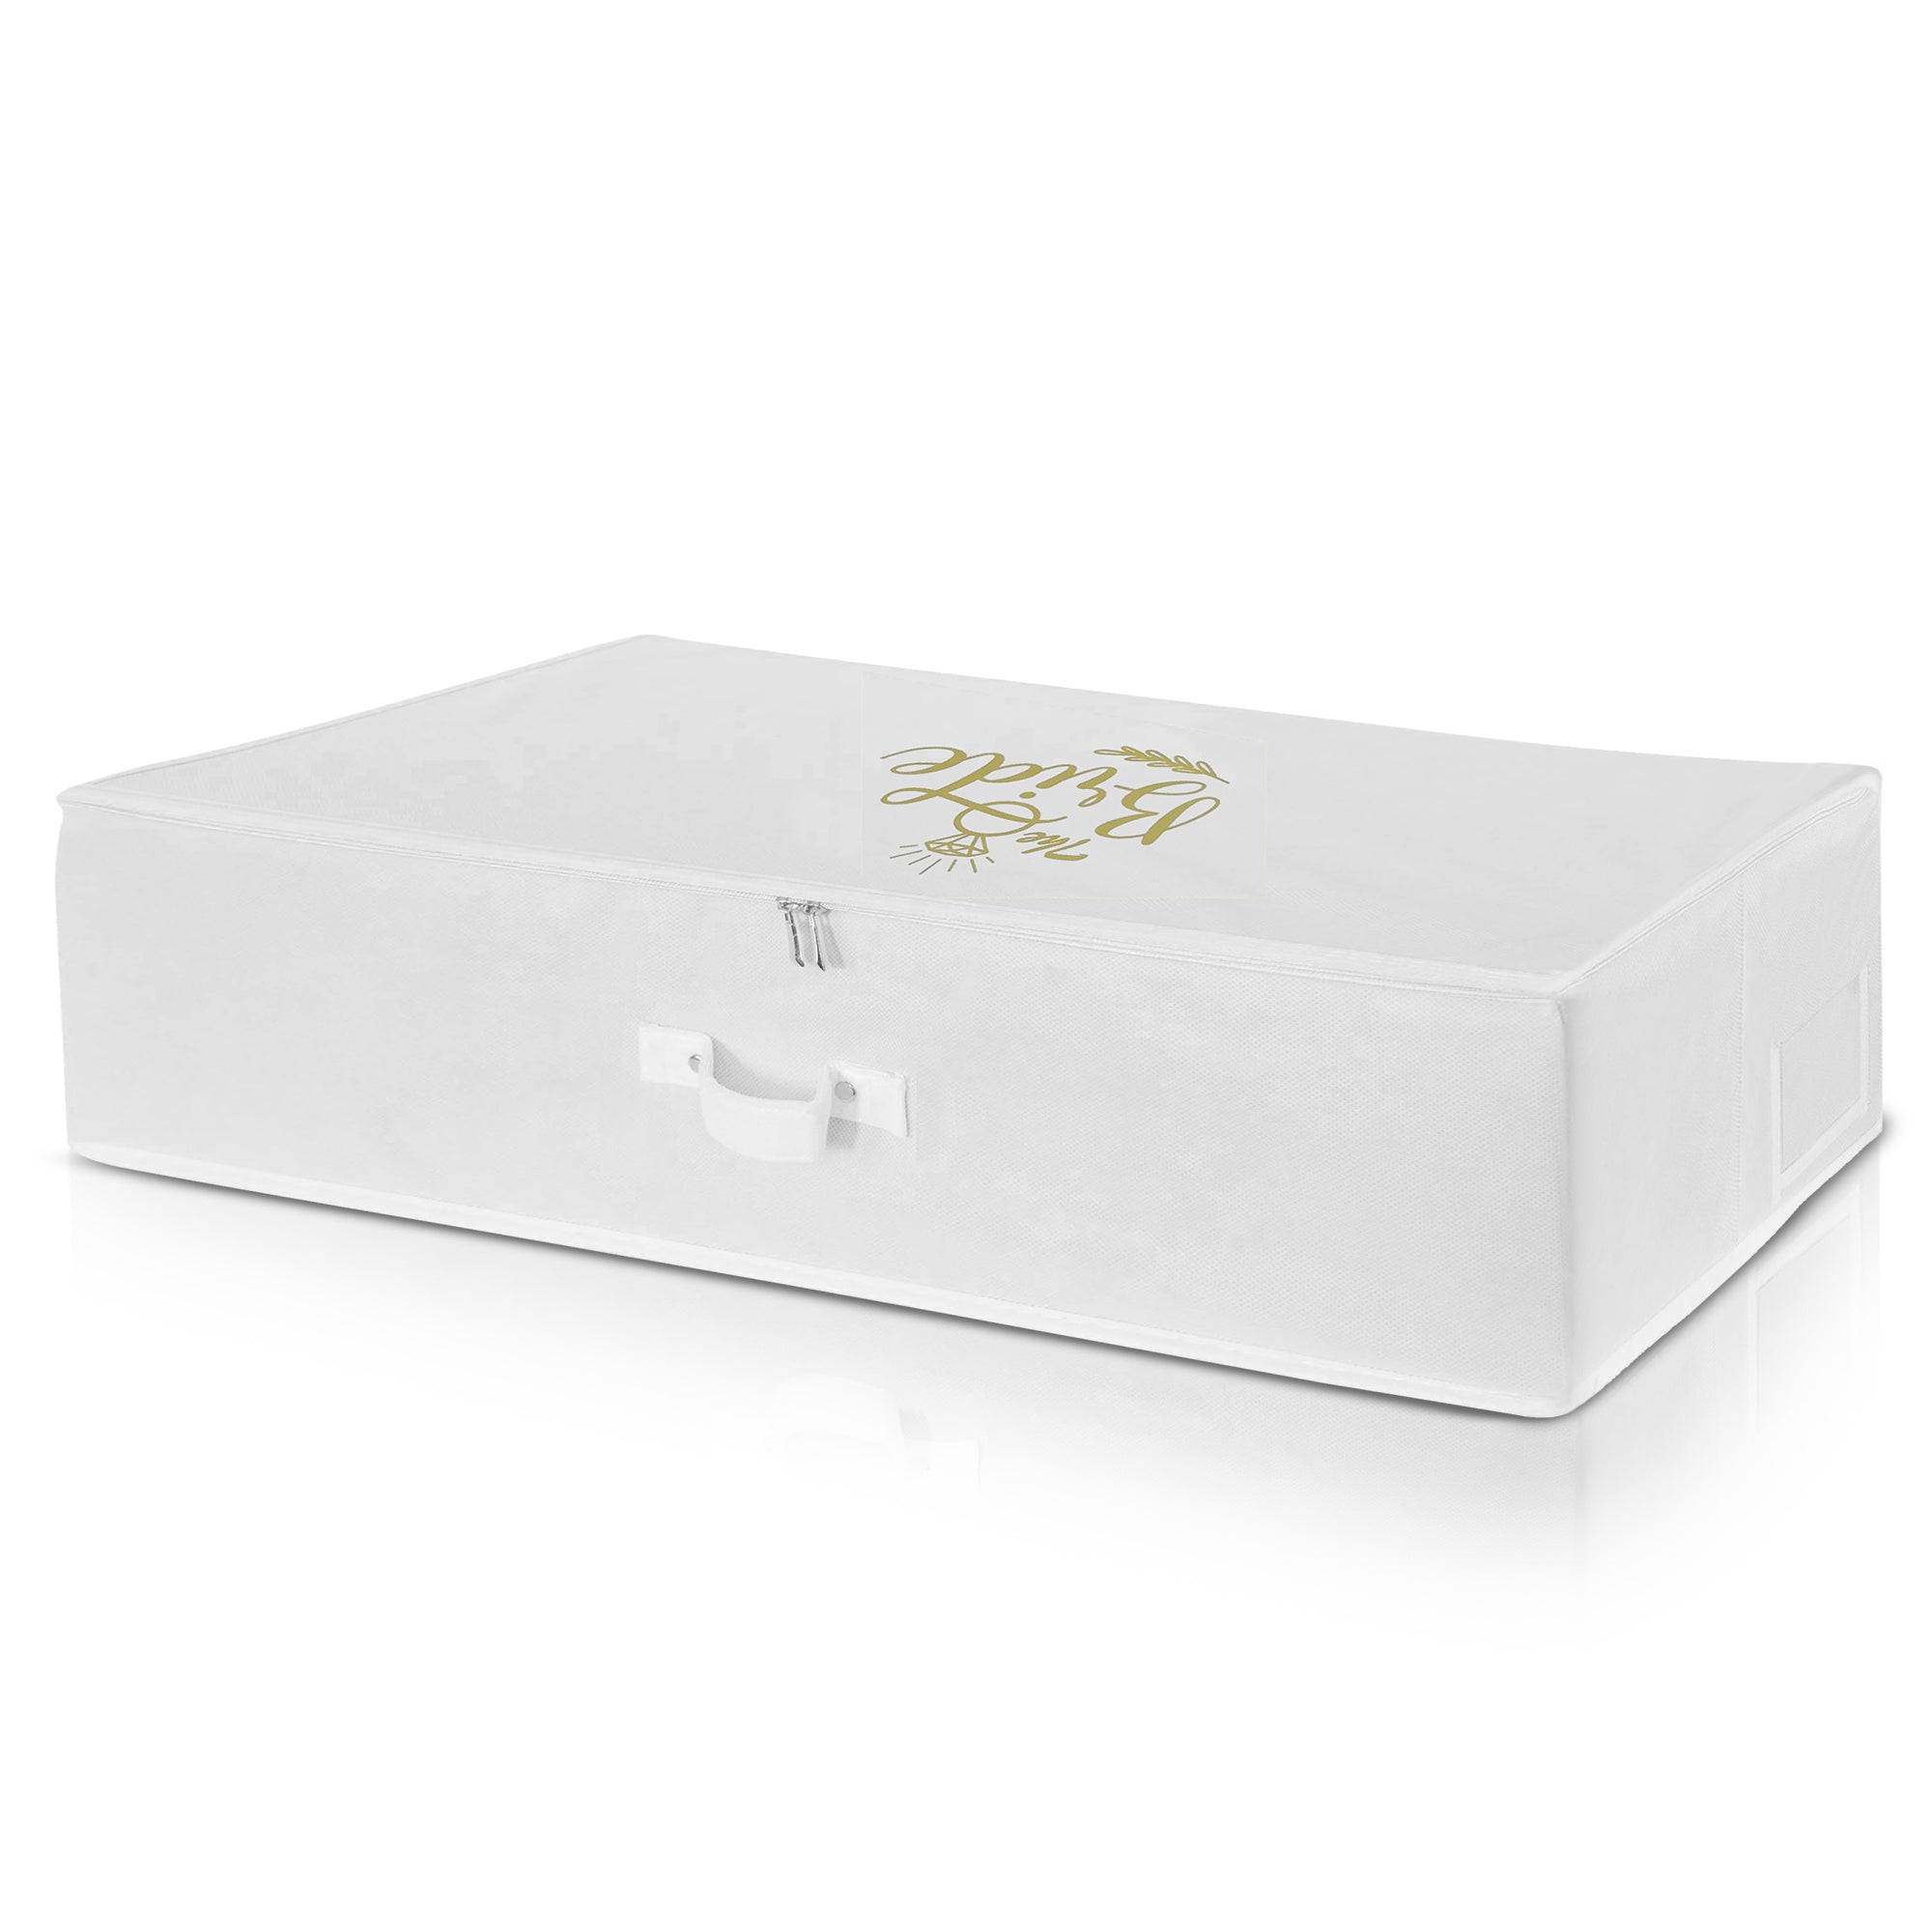 Personalised White Wedding Dress Cover Bag Travel Storage box